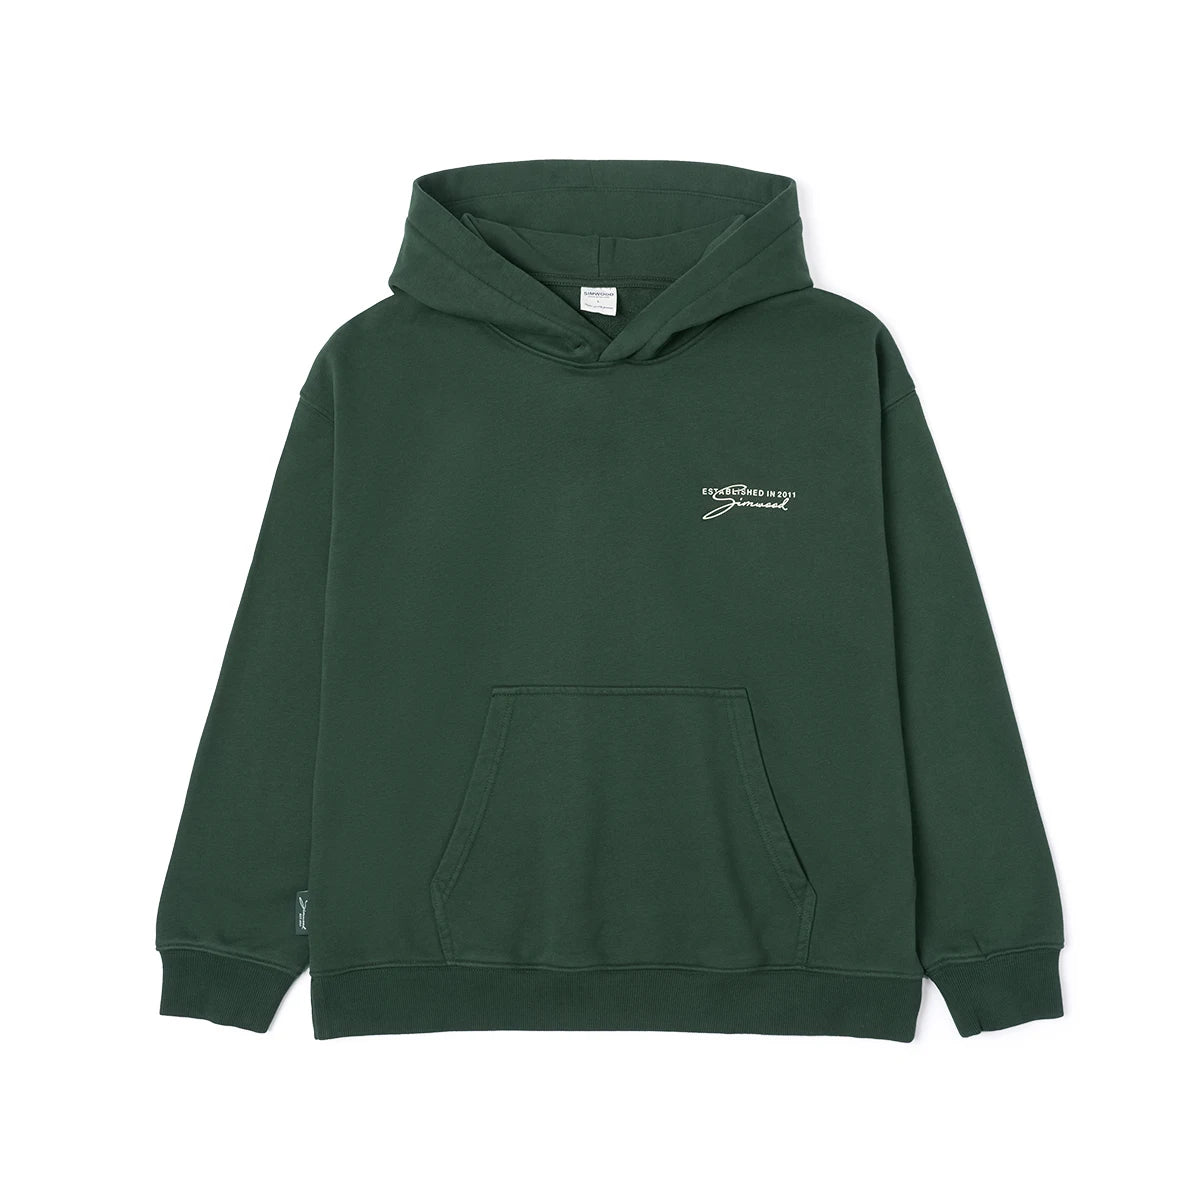 Green Represent hoodie